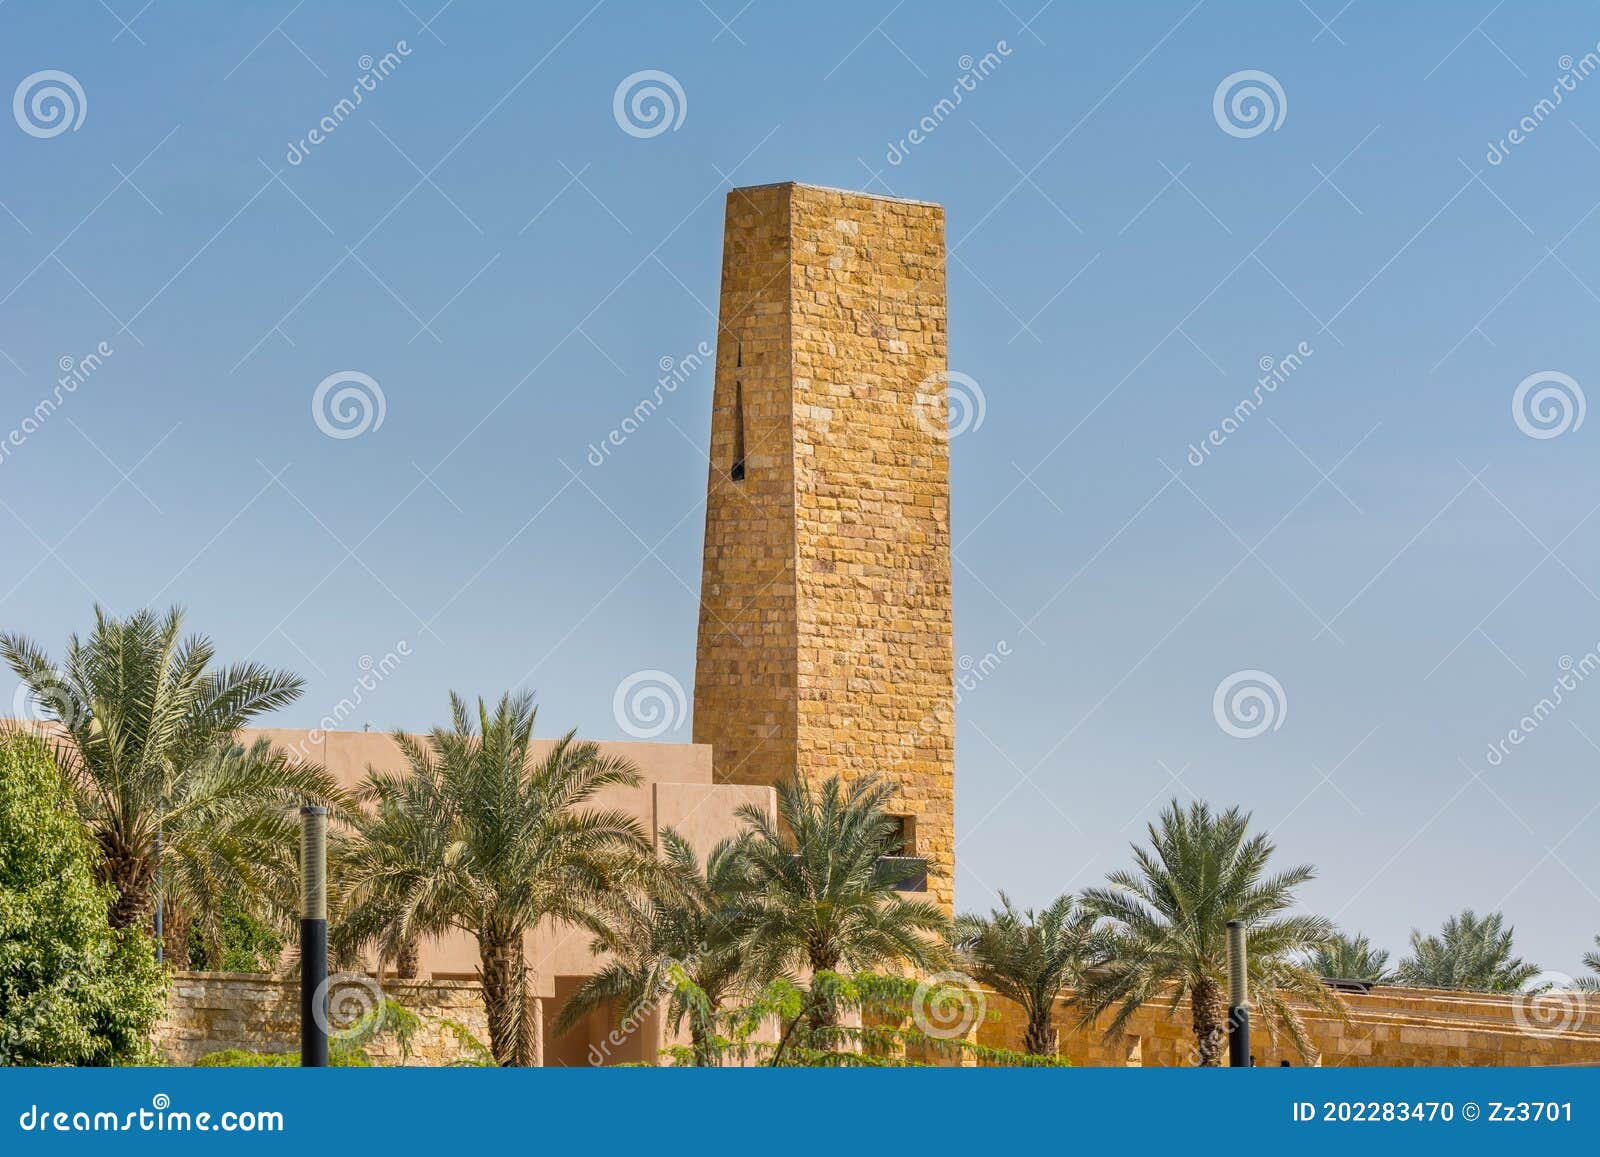 palm trees and buildings of diraiyah, also as dereyeh and dariyya, a town in riyadh, saudi arabia, was the original home of the